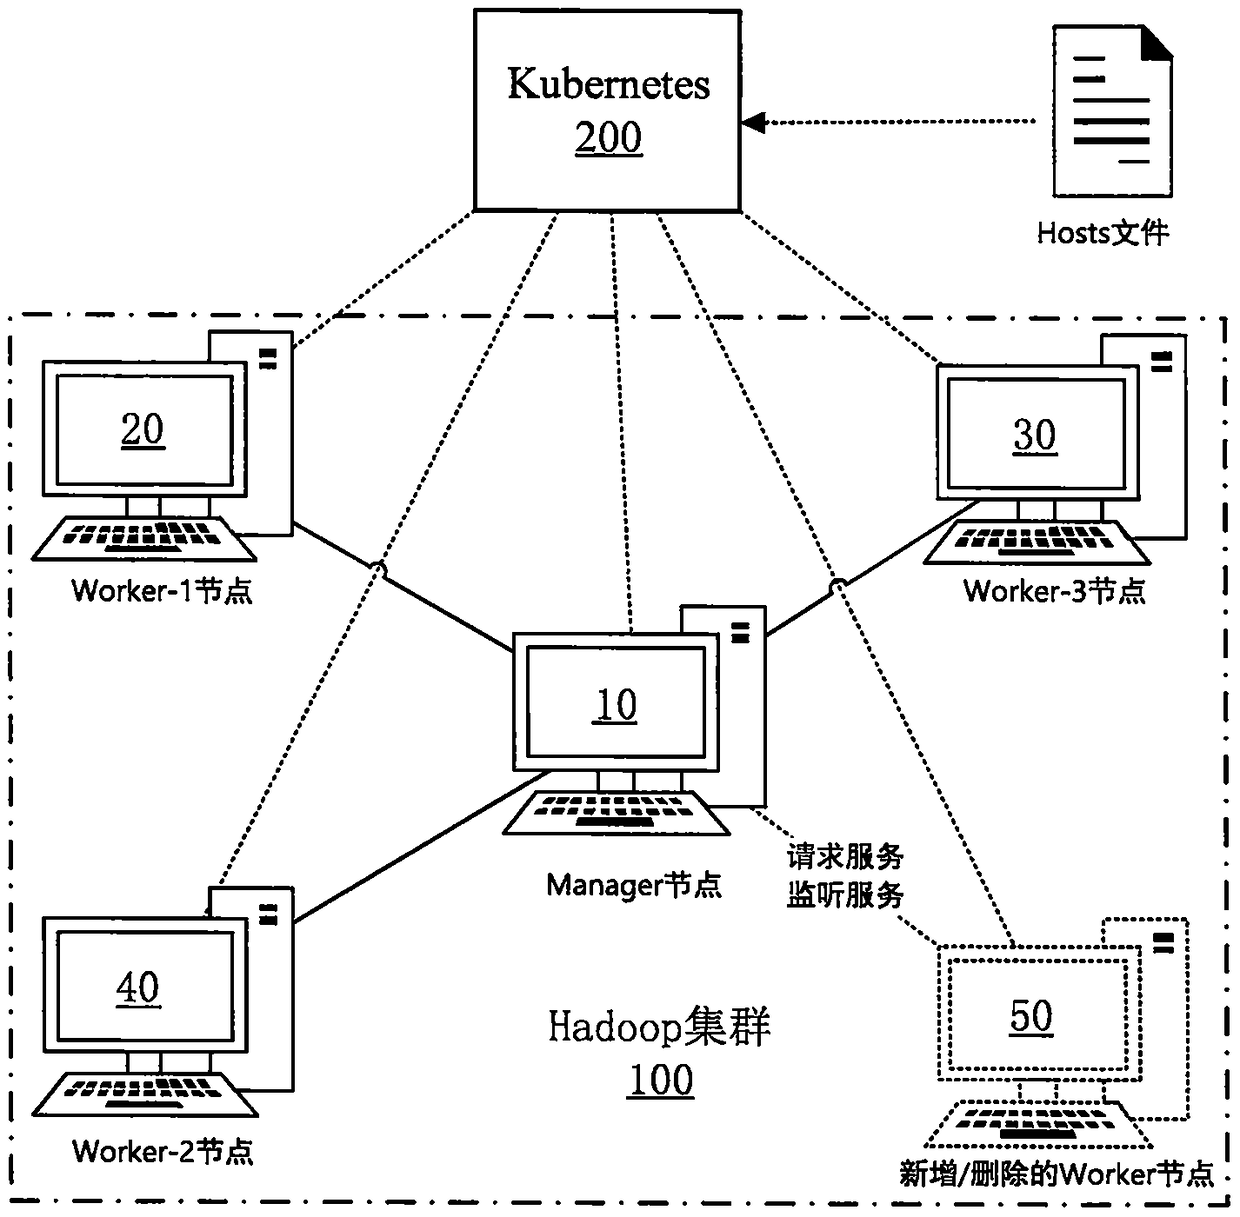 A method for establishing a Hadoop cluster based on Kubernets